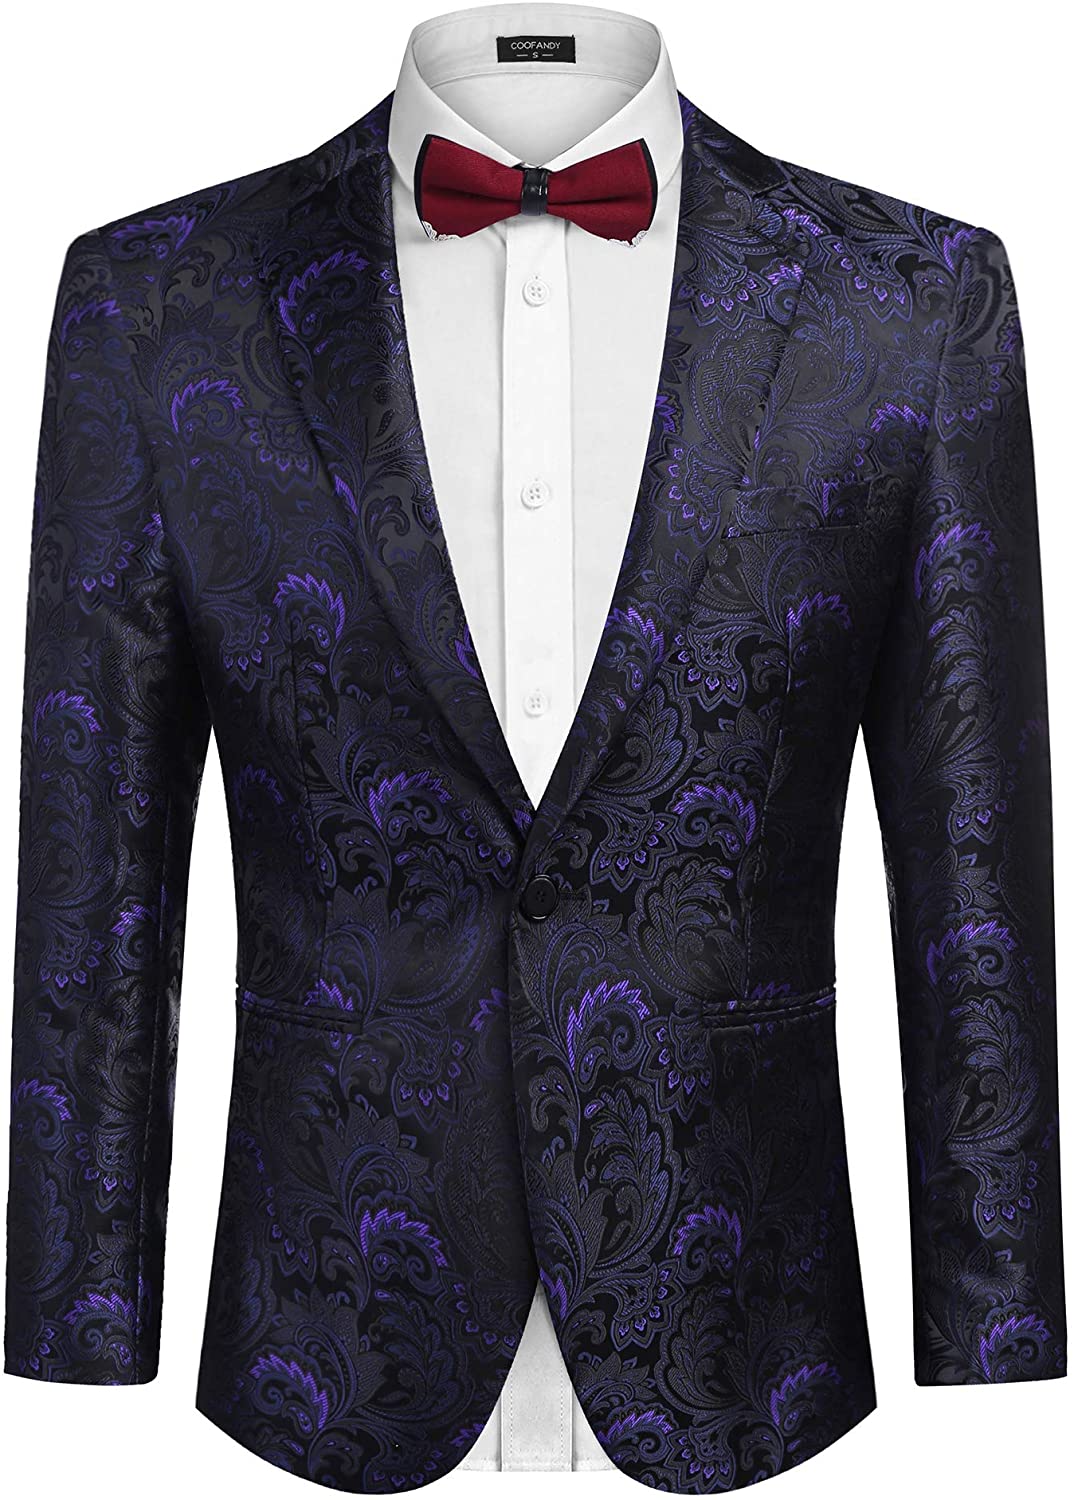 COOFANDY Men Luxury Paisley Floral Suit Jacket Blazer Wedding Prom Party  Tuxedo